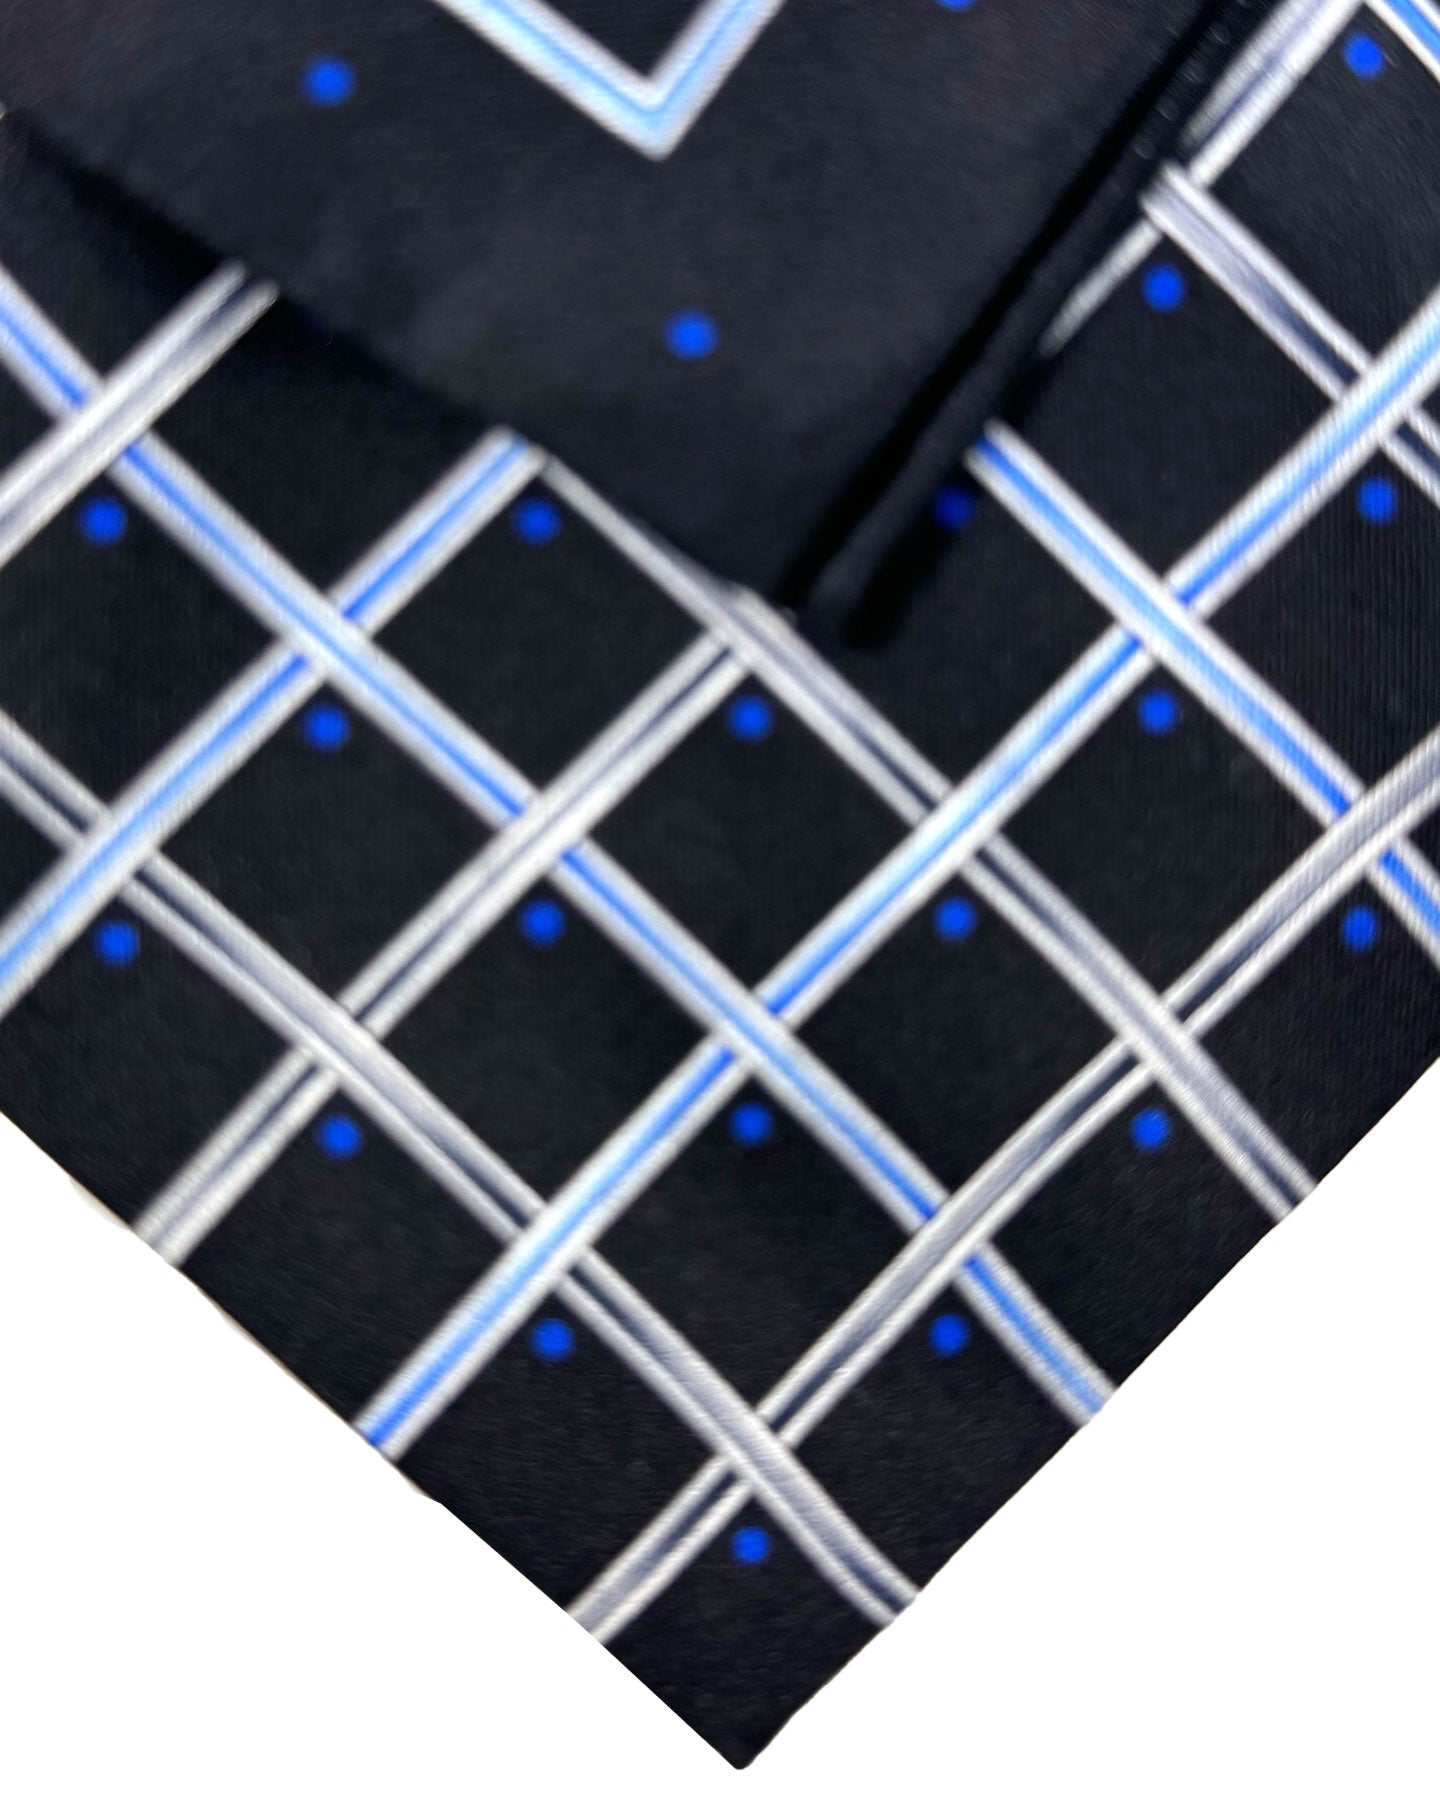 Zilli Silk Tie & Matching Pocket Square Set Black Royal Blue Gray Check Design